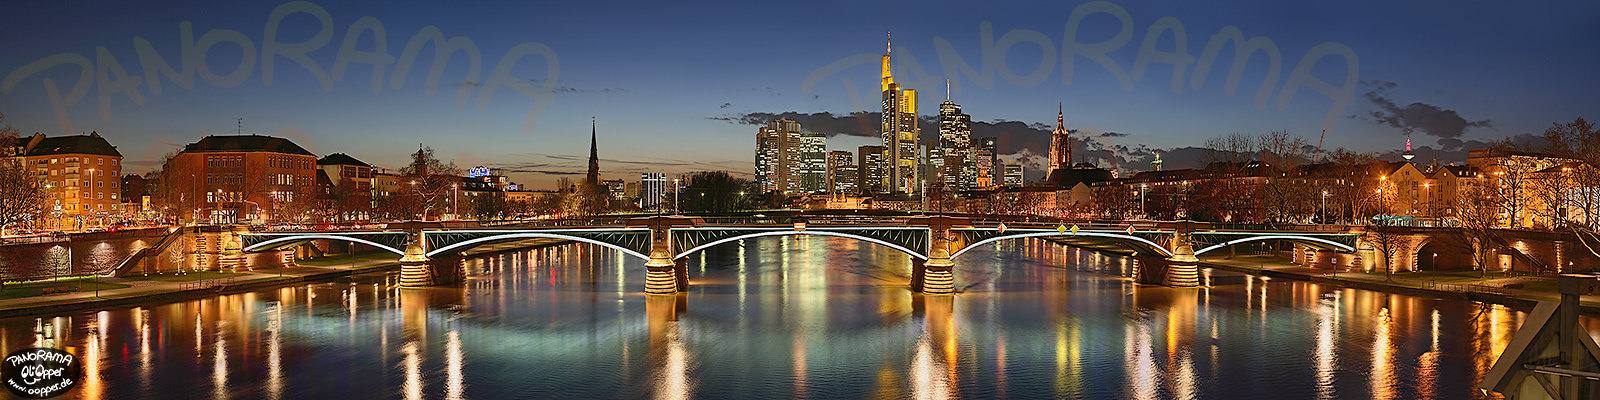 Frankfurt Skyline - p153 - (c) by Oliver Opper